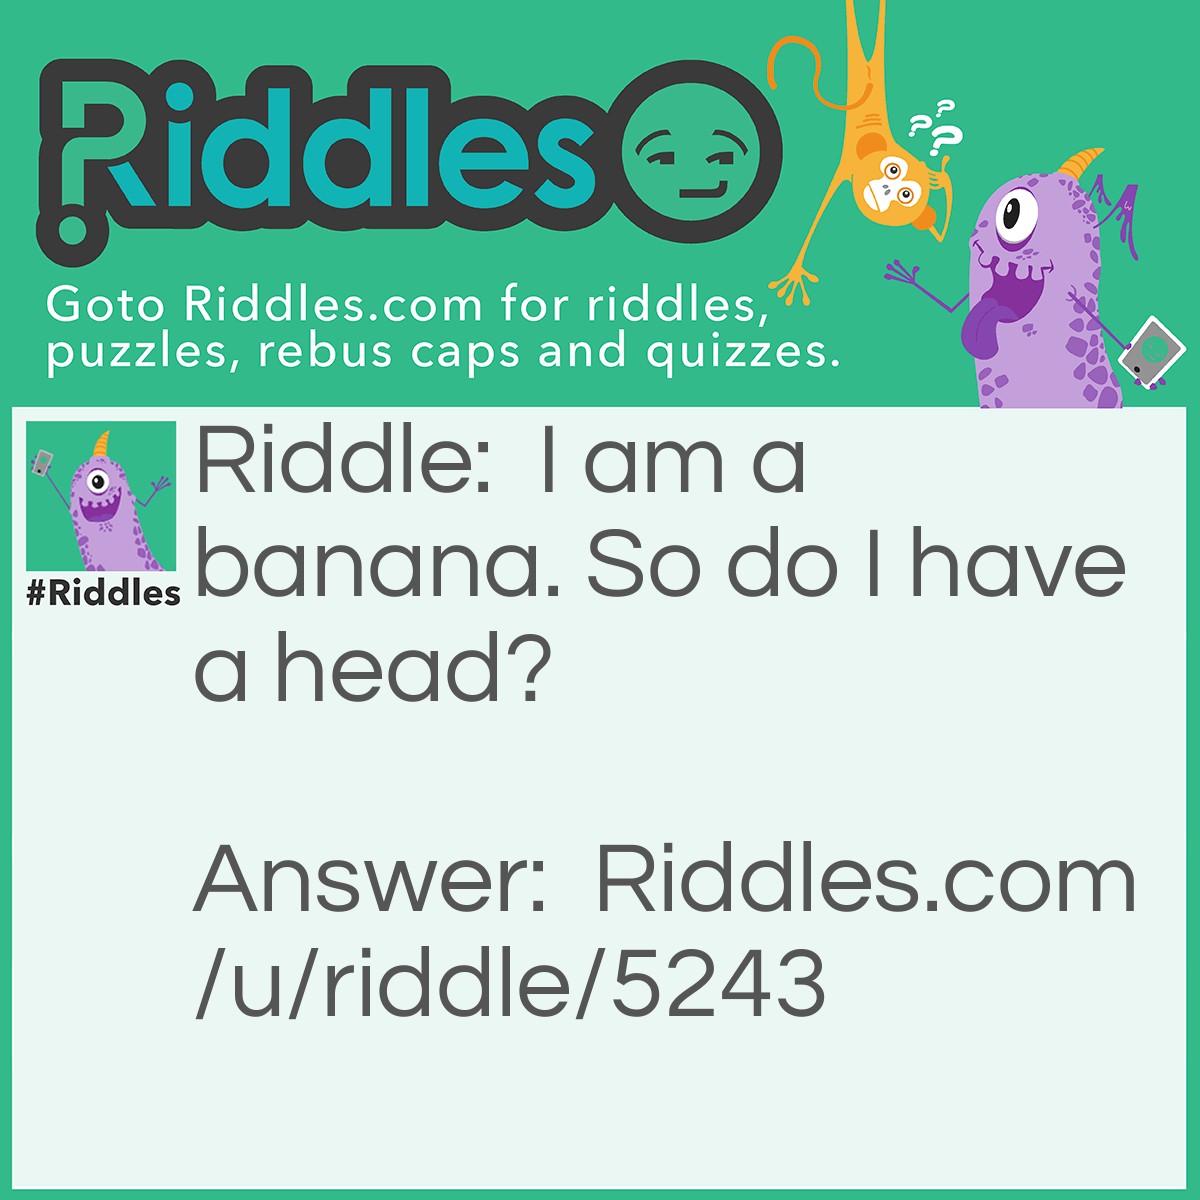 Riddle: I am a banana. So do I have a head? Answer: No! Of course!